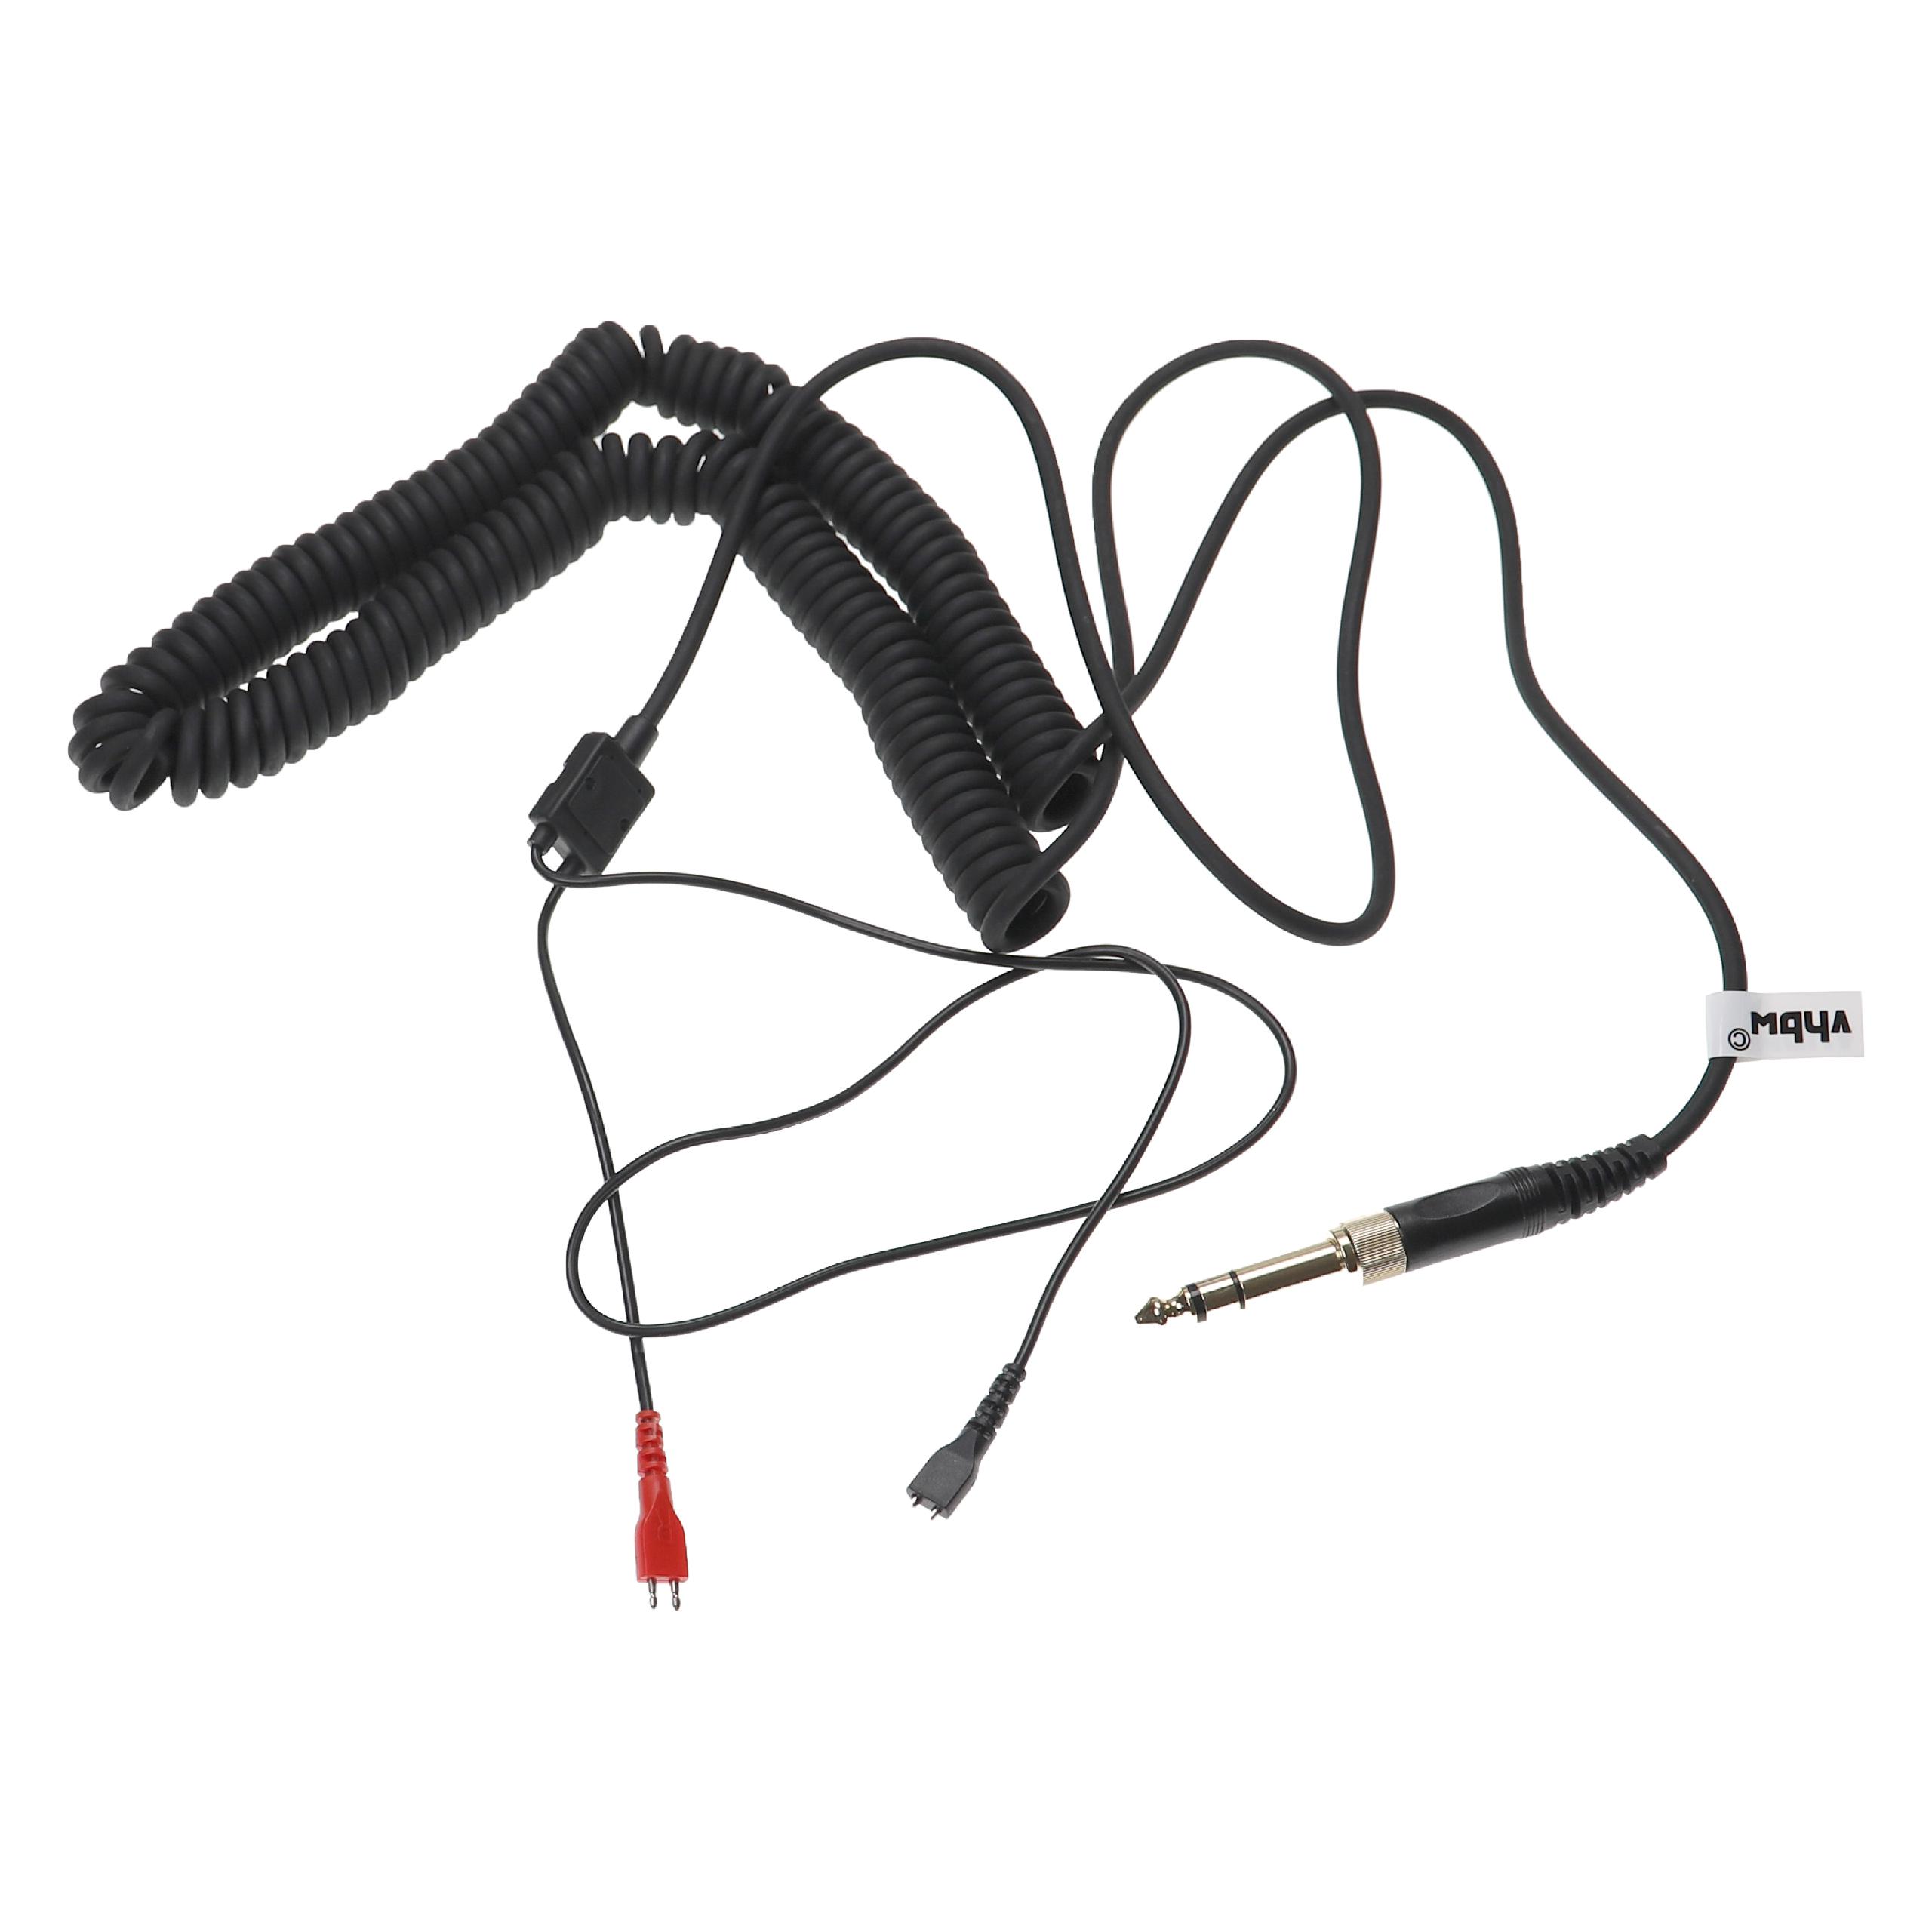 Headphones Cable suitable for Sennheiser HD580 etc., 1.5 - 4 m